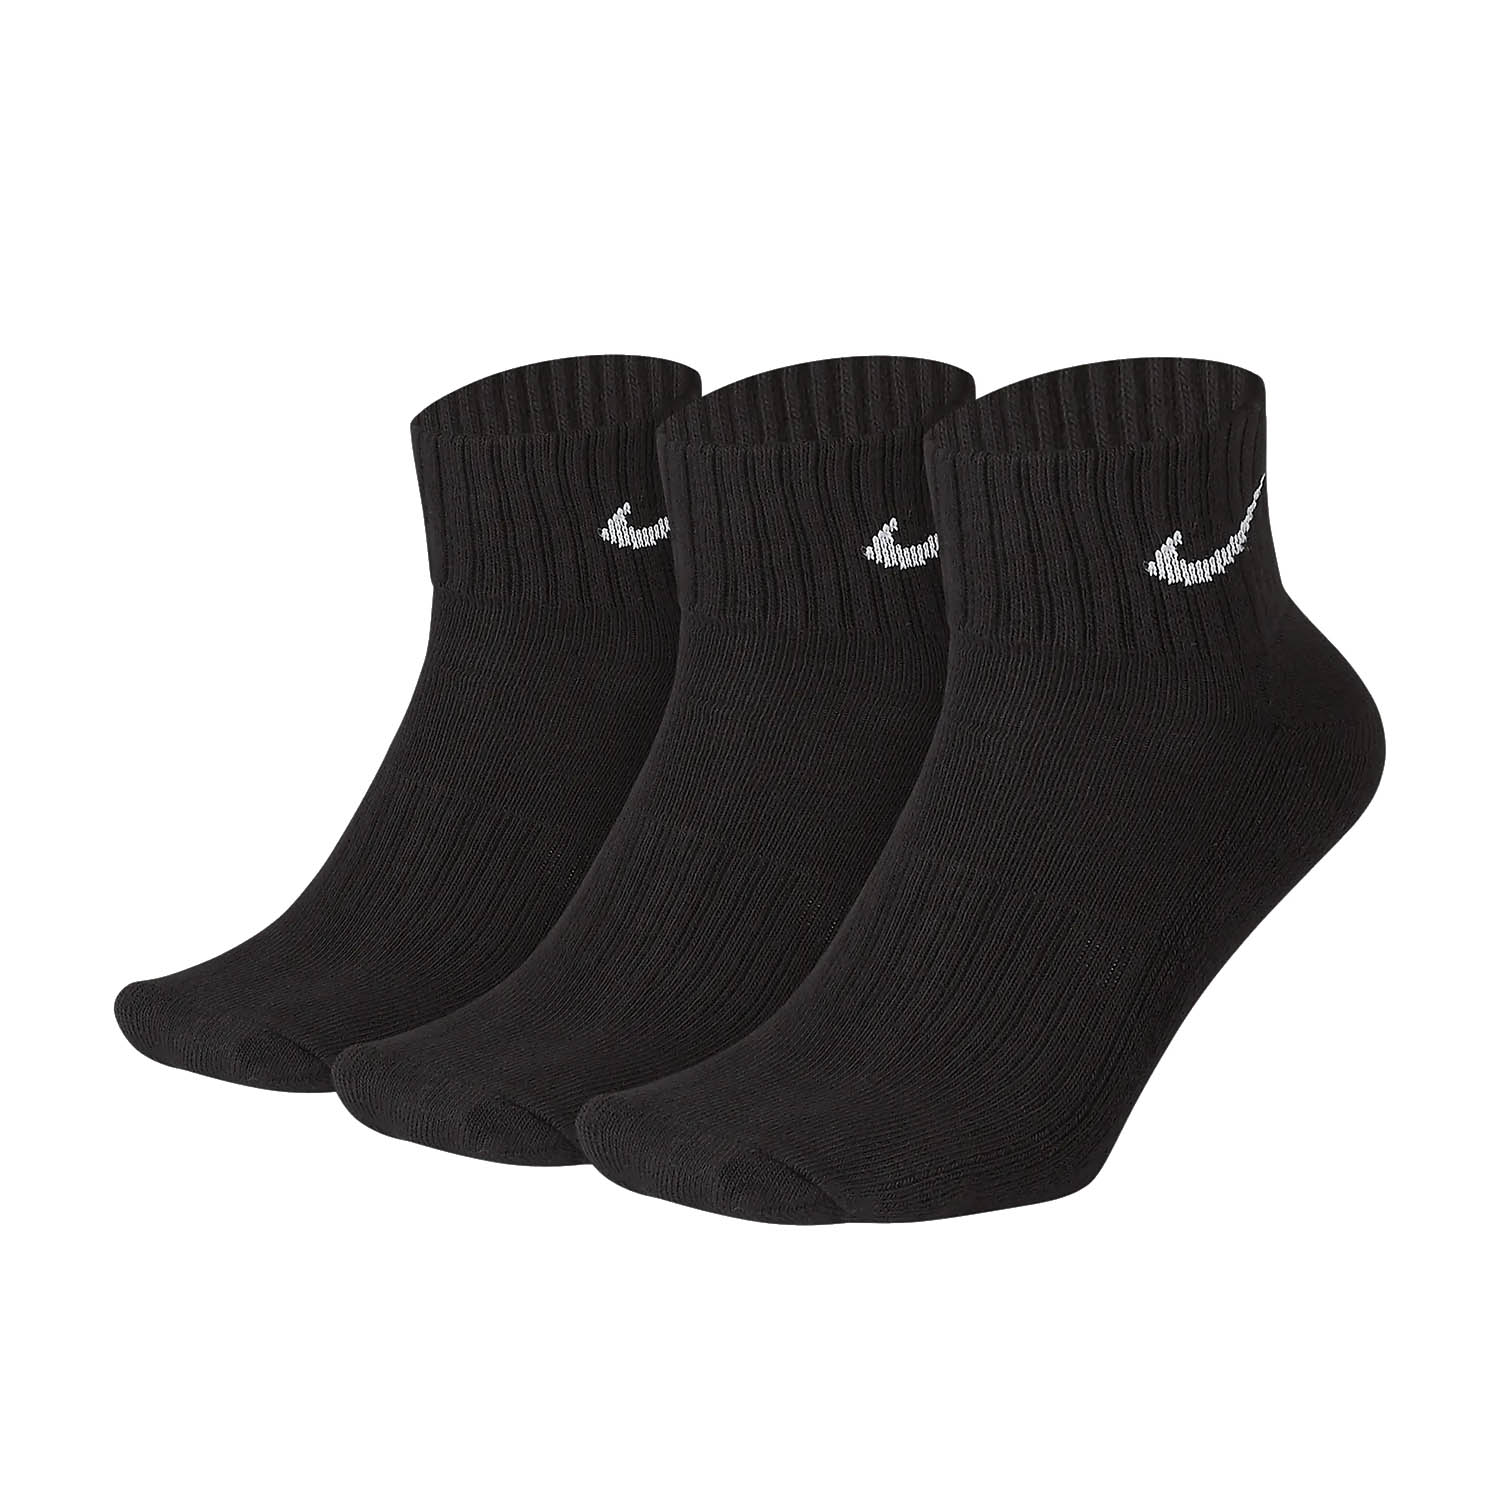 Nike Cushion x 3 Socks - Black/White